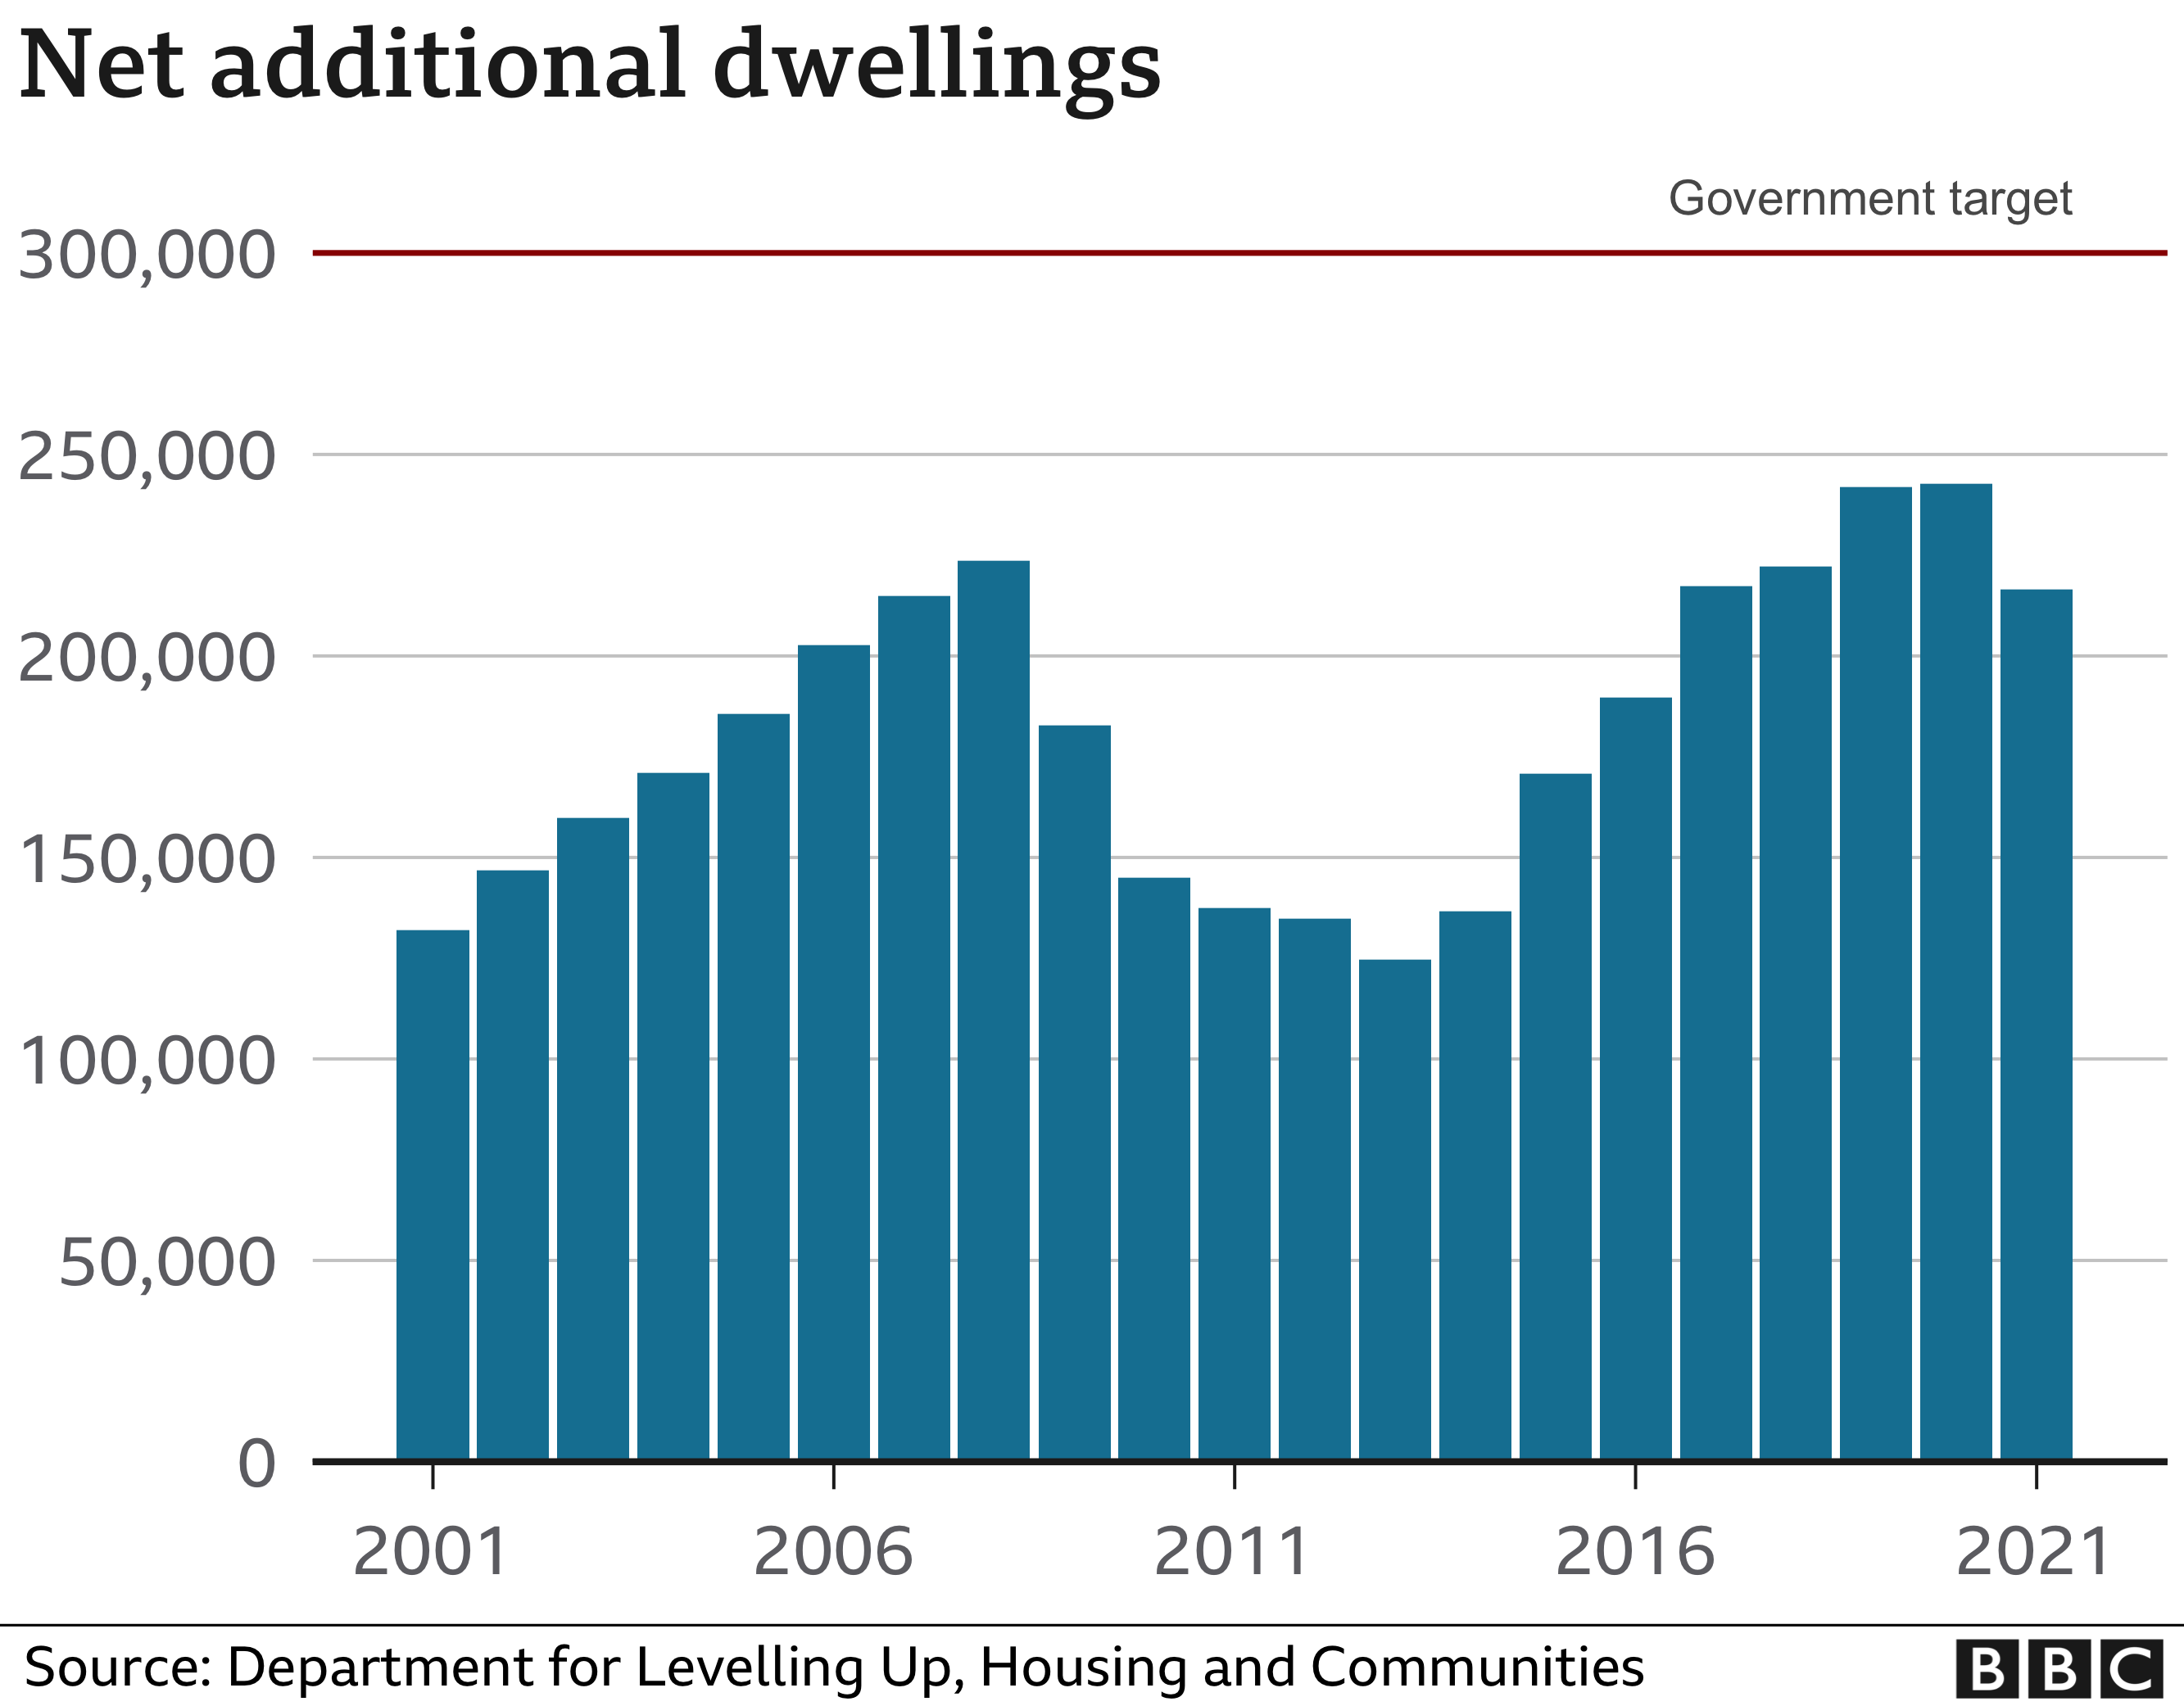 Chart showing net additional dwellings since 2000